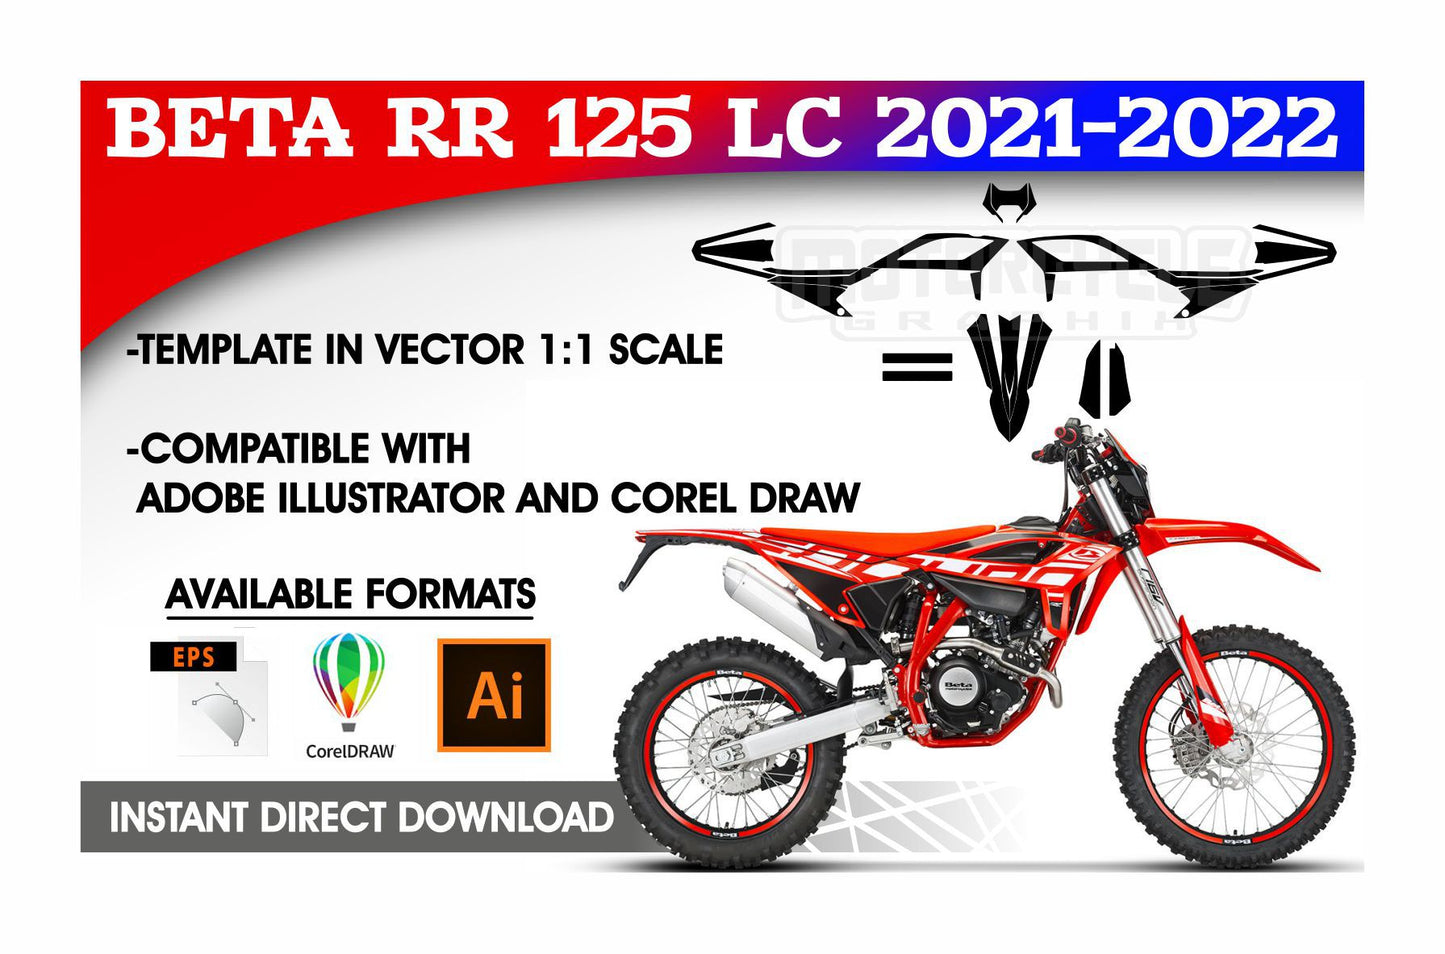 BETA RR 125 LC 2021-2022